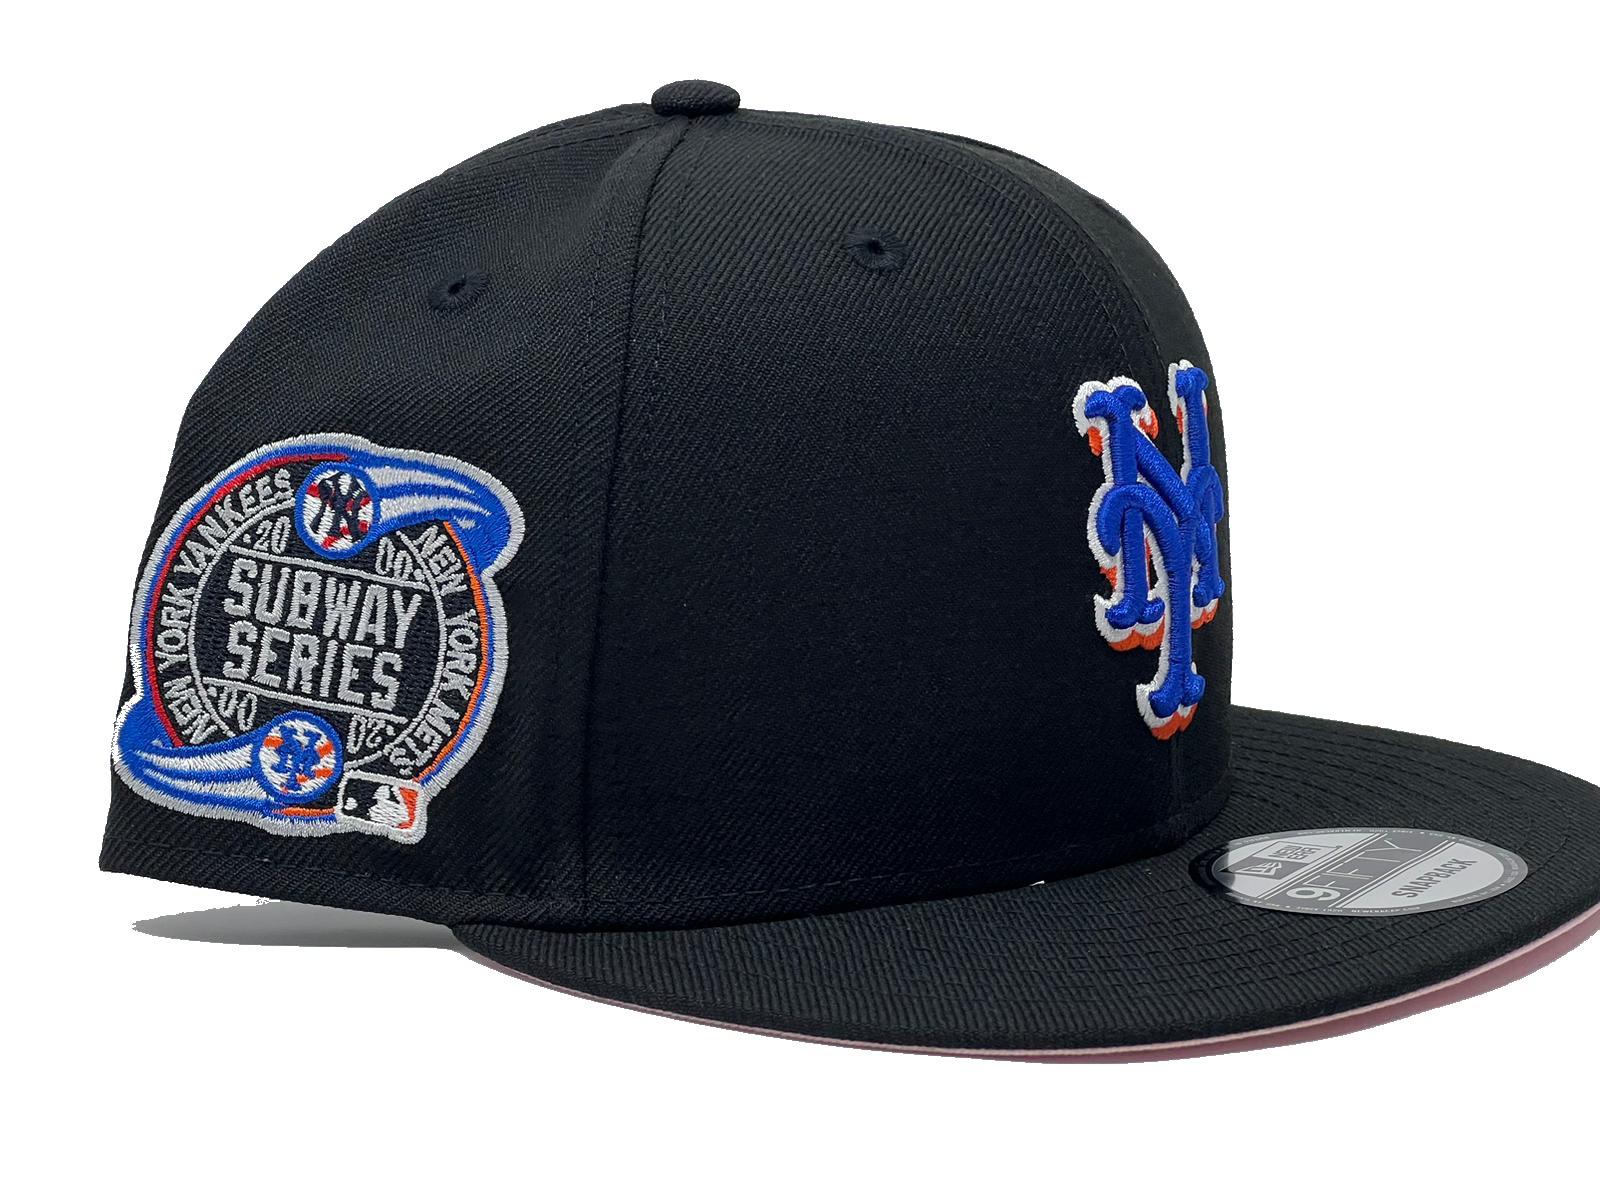 New York Mets New Era Black on Black 9FIFTY Team Snapback Adjustable Hat -  Black